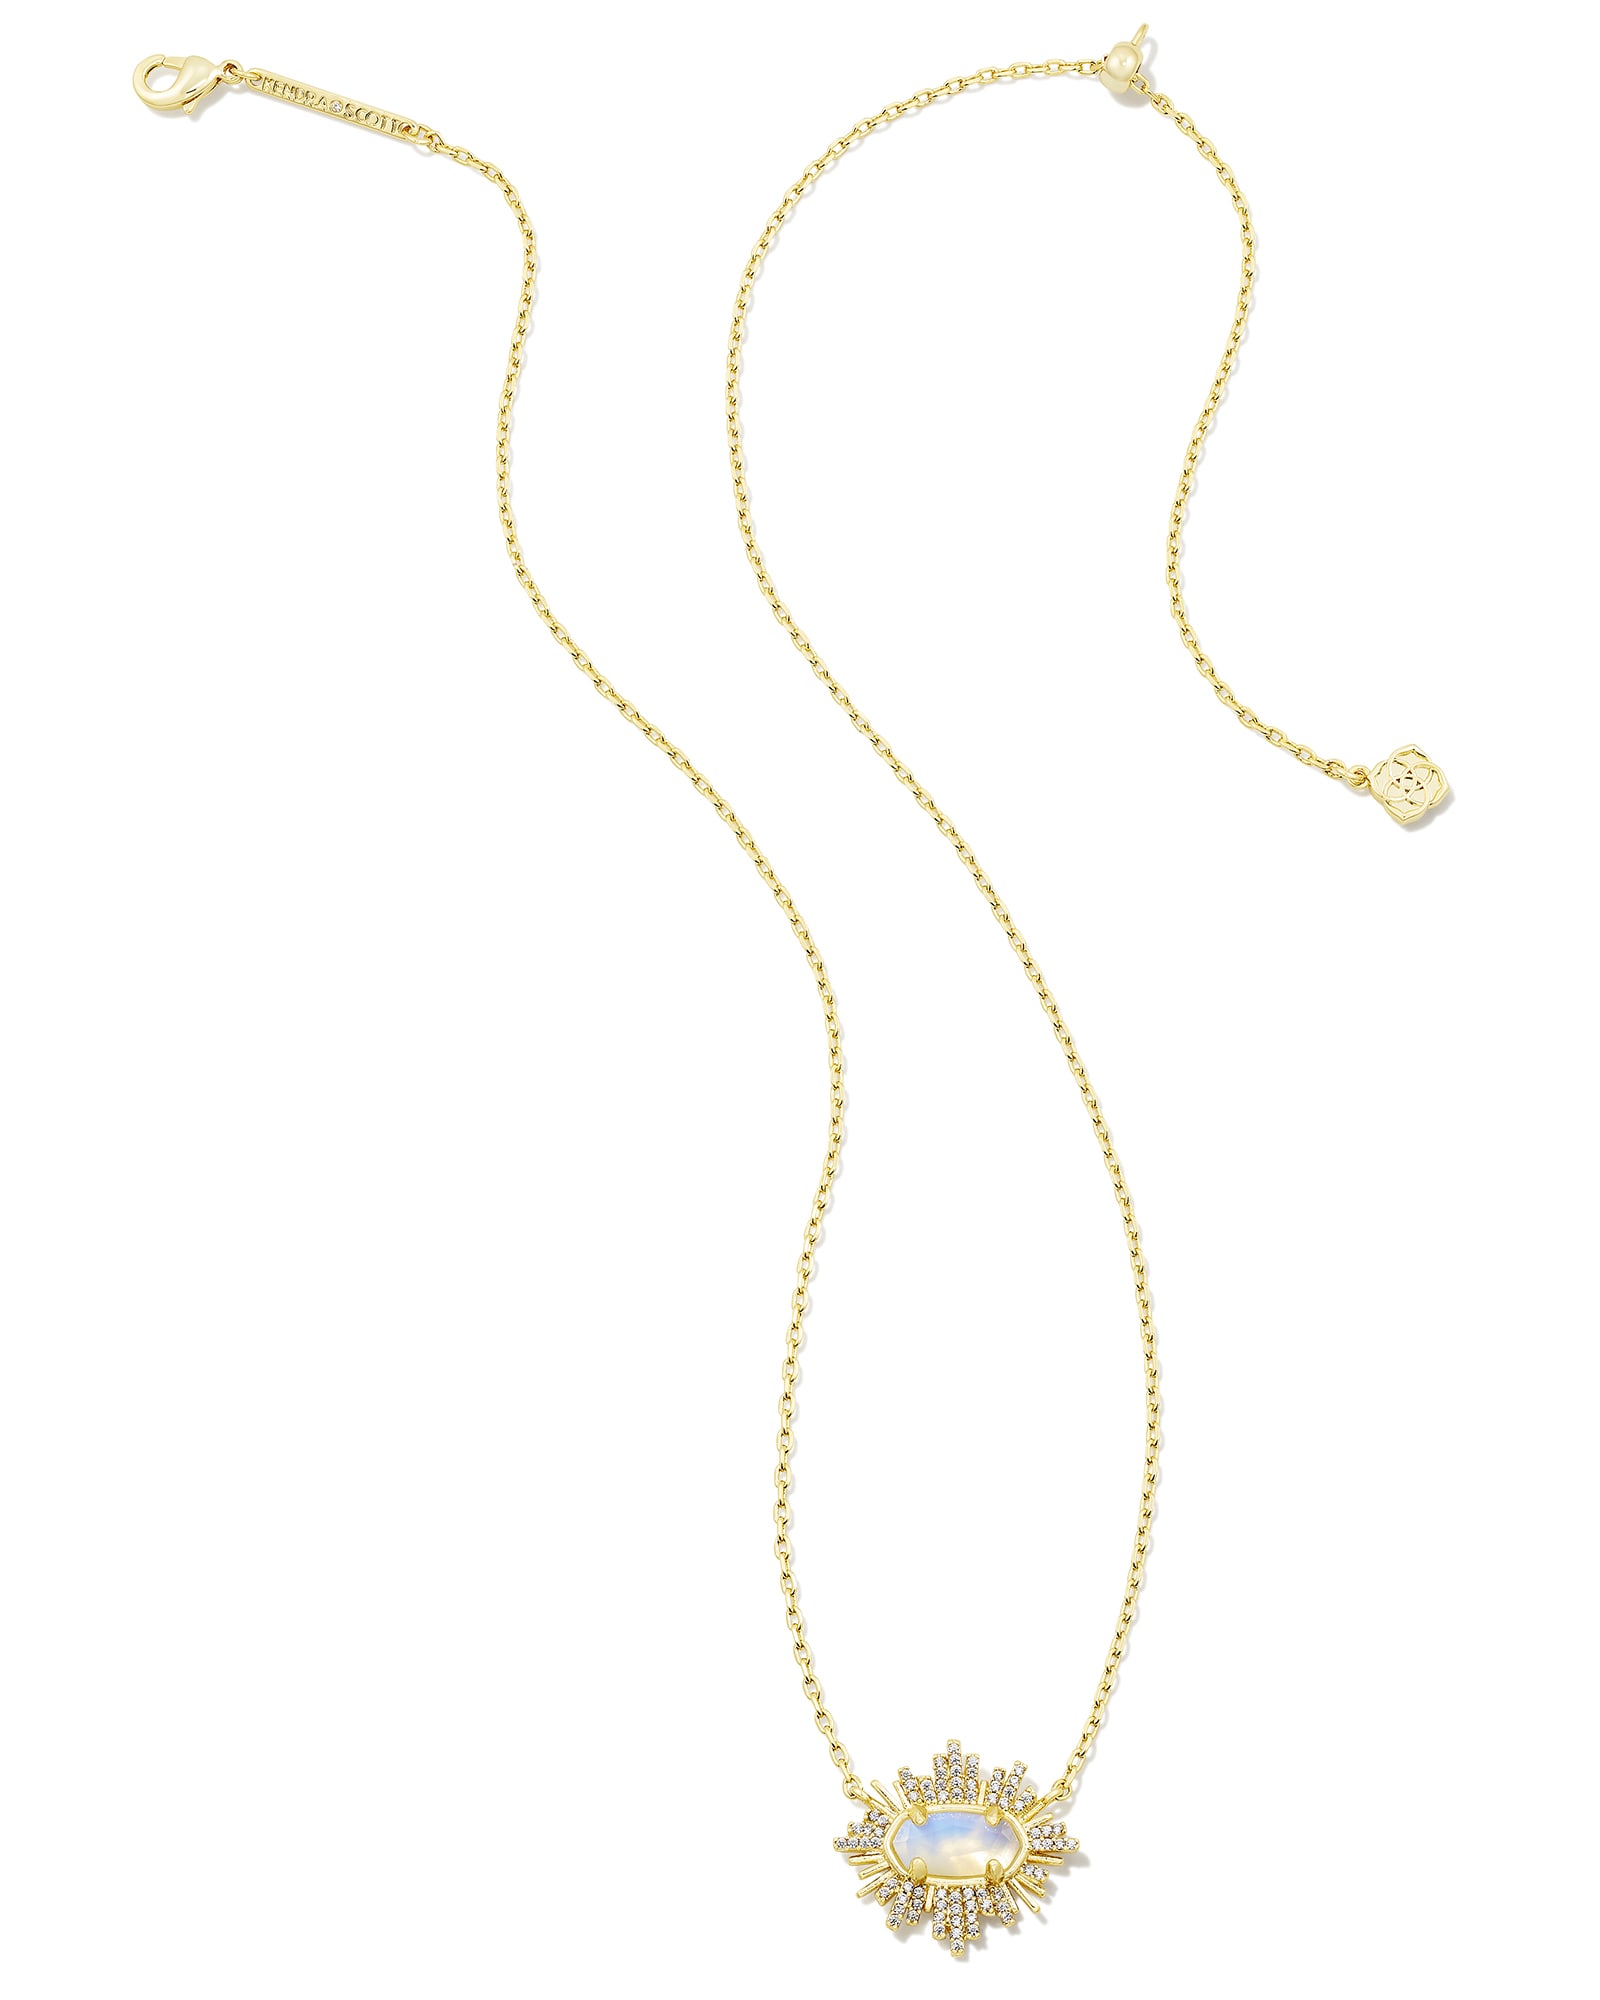 Grayson Gold Sunburst Frame Short Pendant Necklace in Iridescent Opalite Illusion